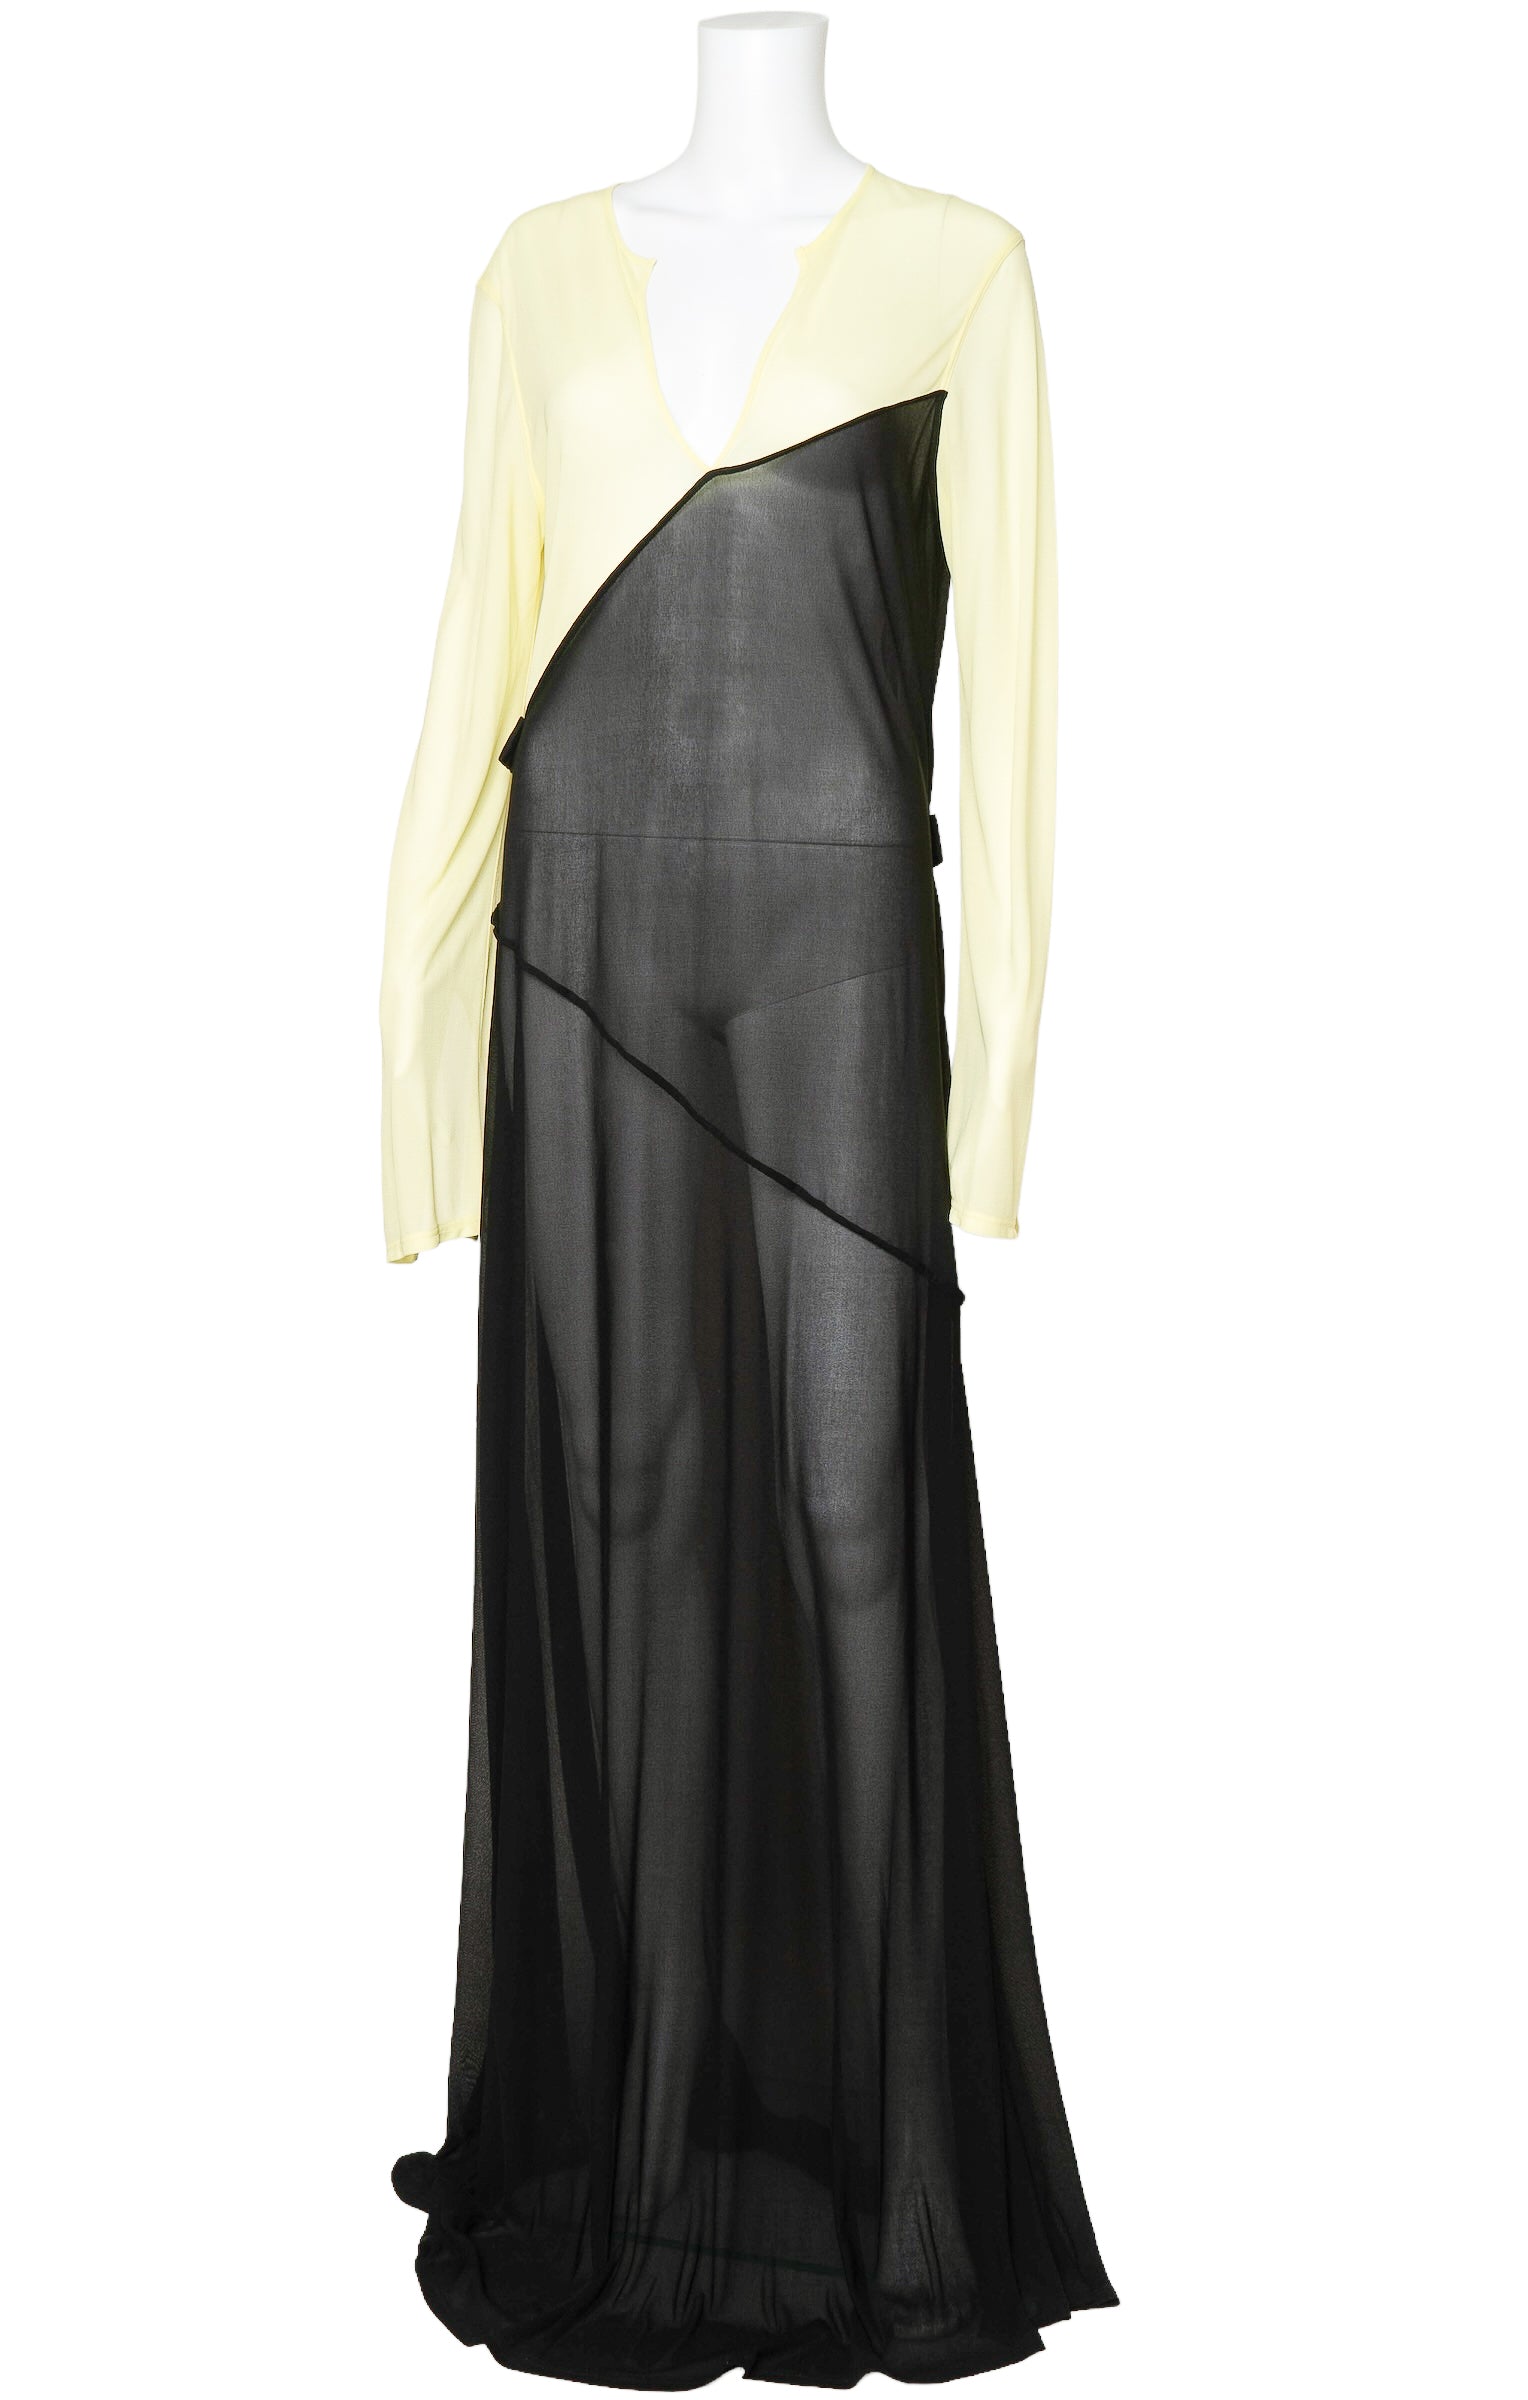 CÉLINE (RARE) Dress Size: FR 42 / Comparable to US 8-10